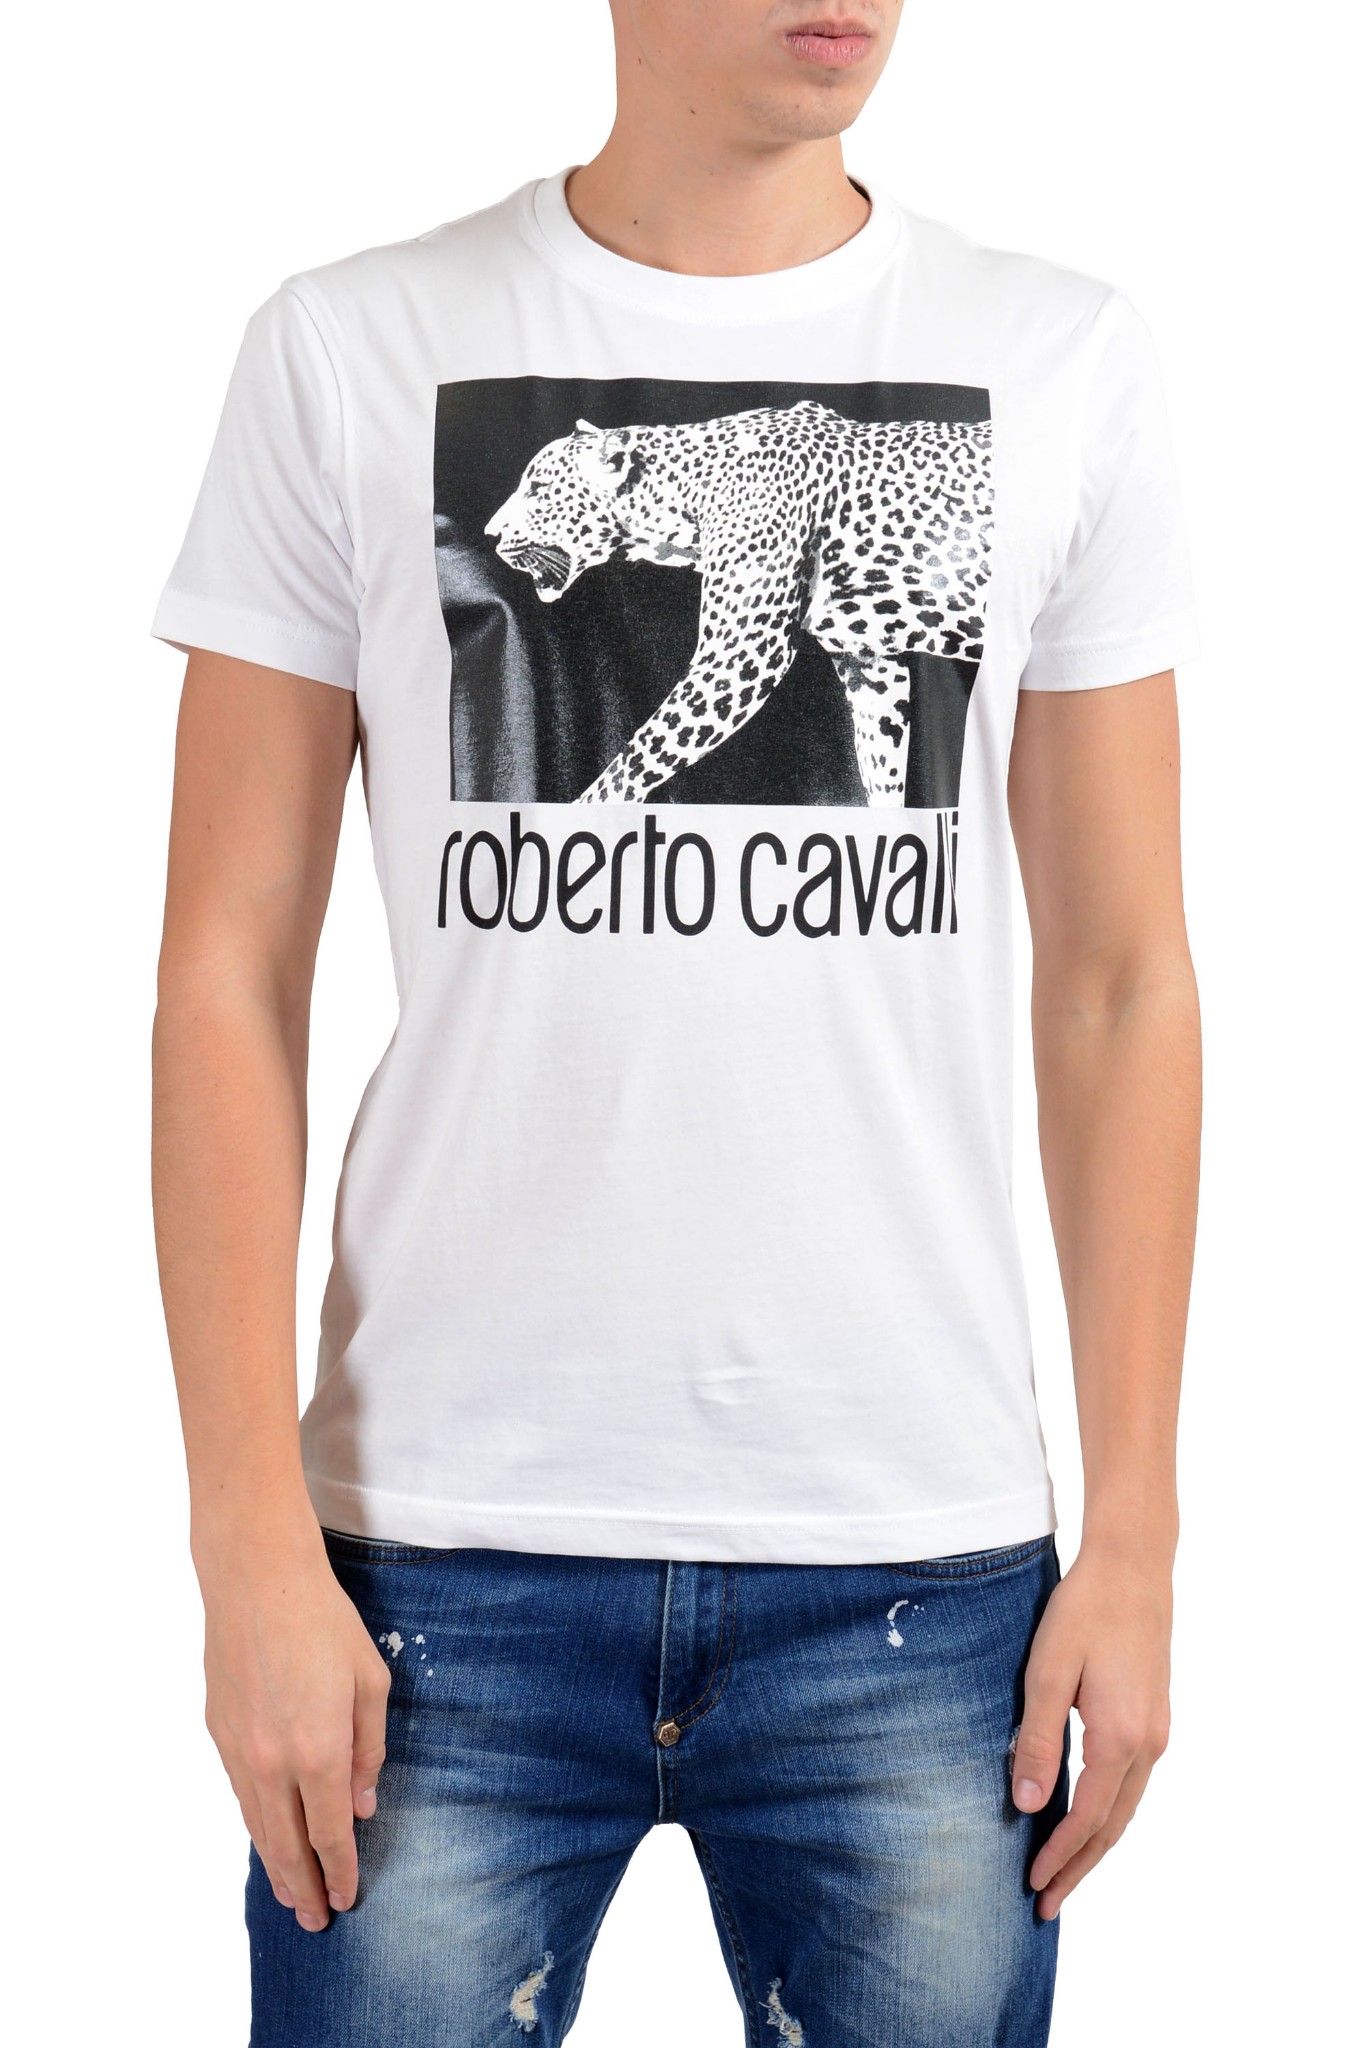 Roberto Cavalli Men's White Graphic Leopard Crewneck T-Shirt Size S M L ...